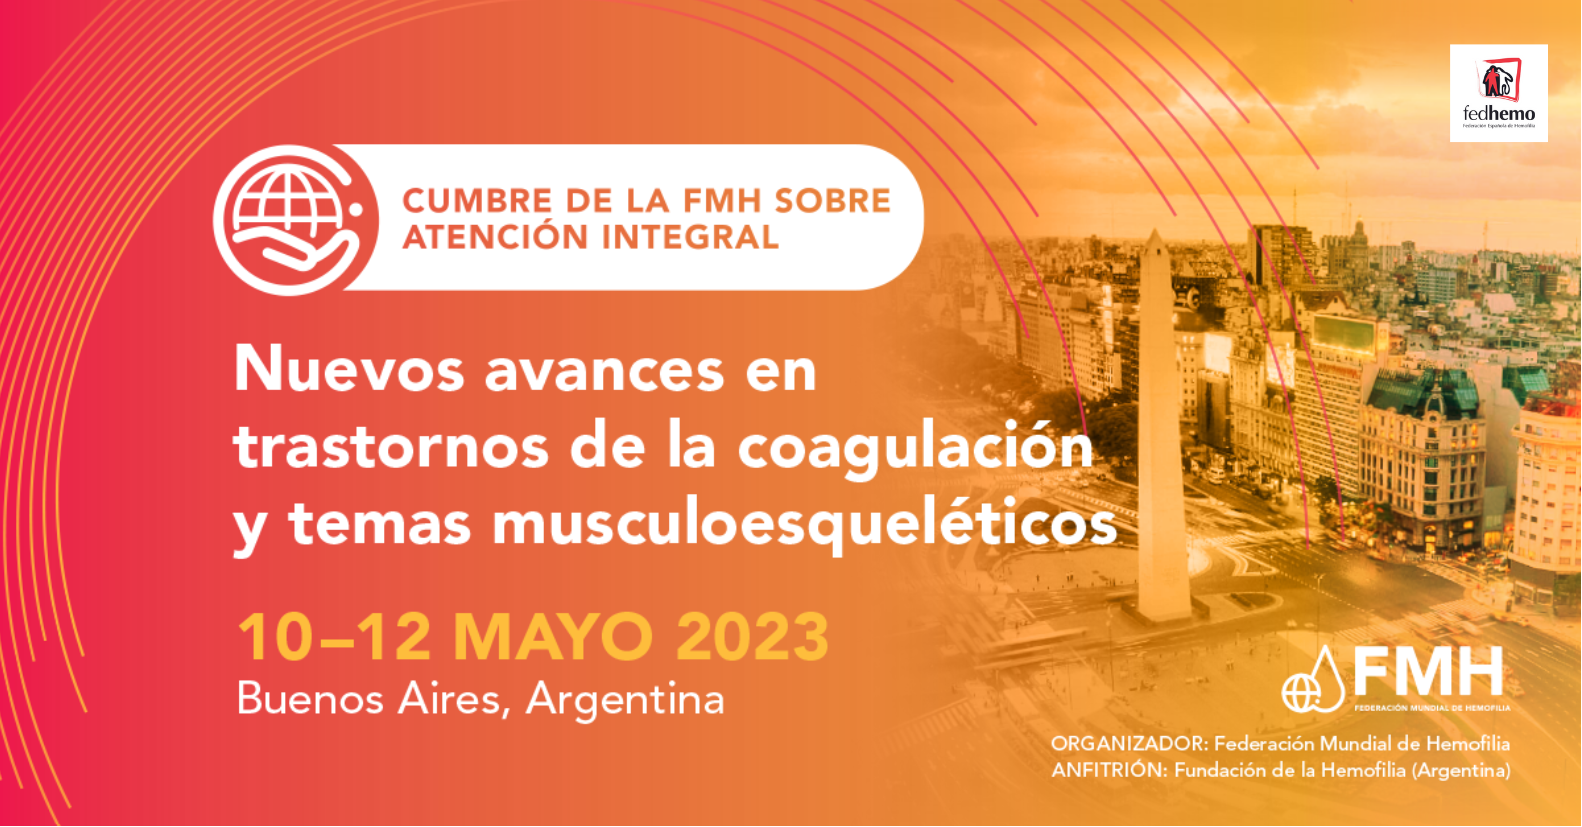 Calentando motores para la Cumbre 2023 de la FMH en Argentina